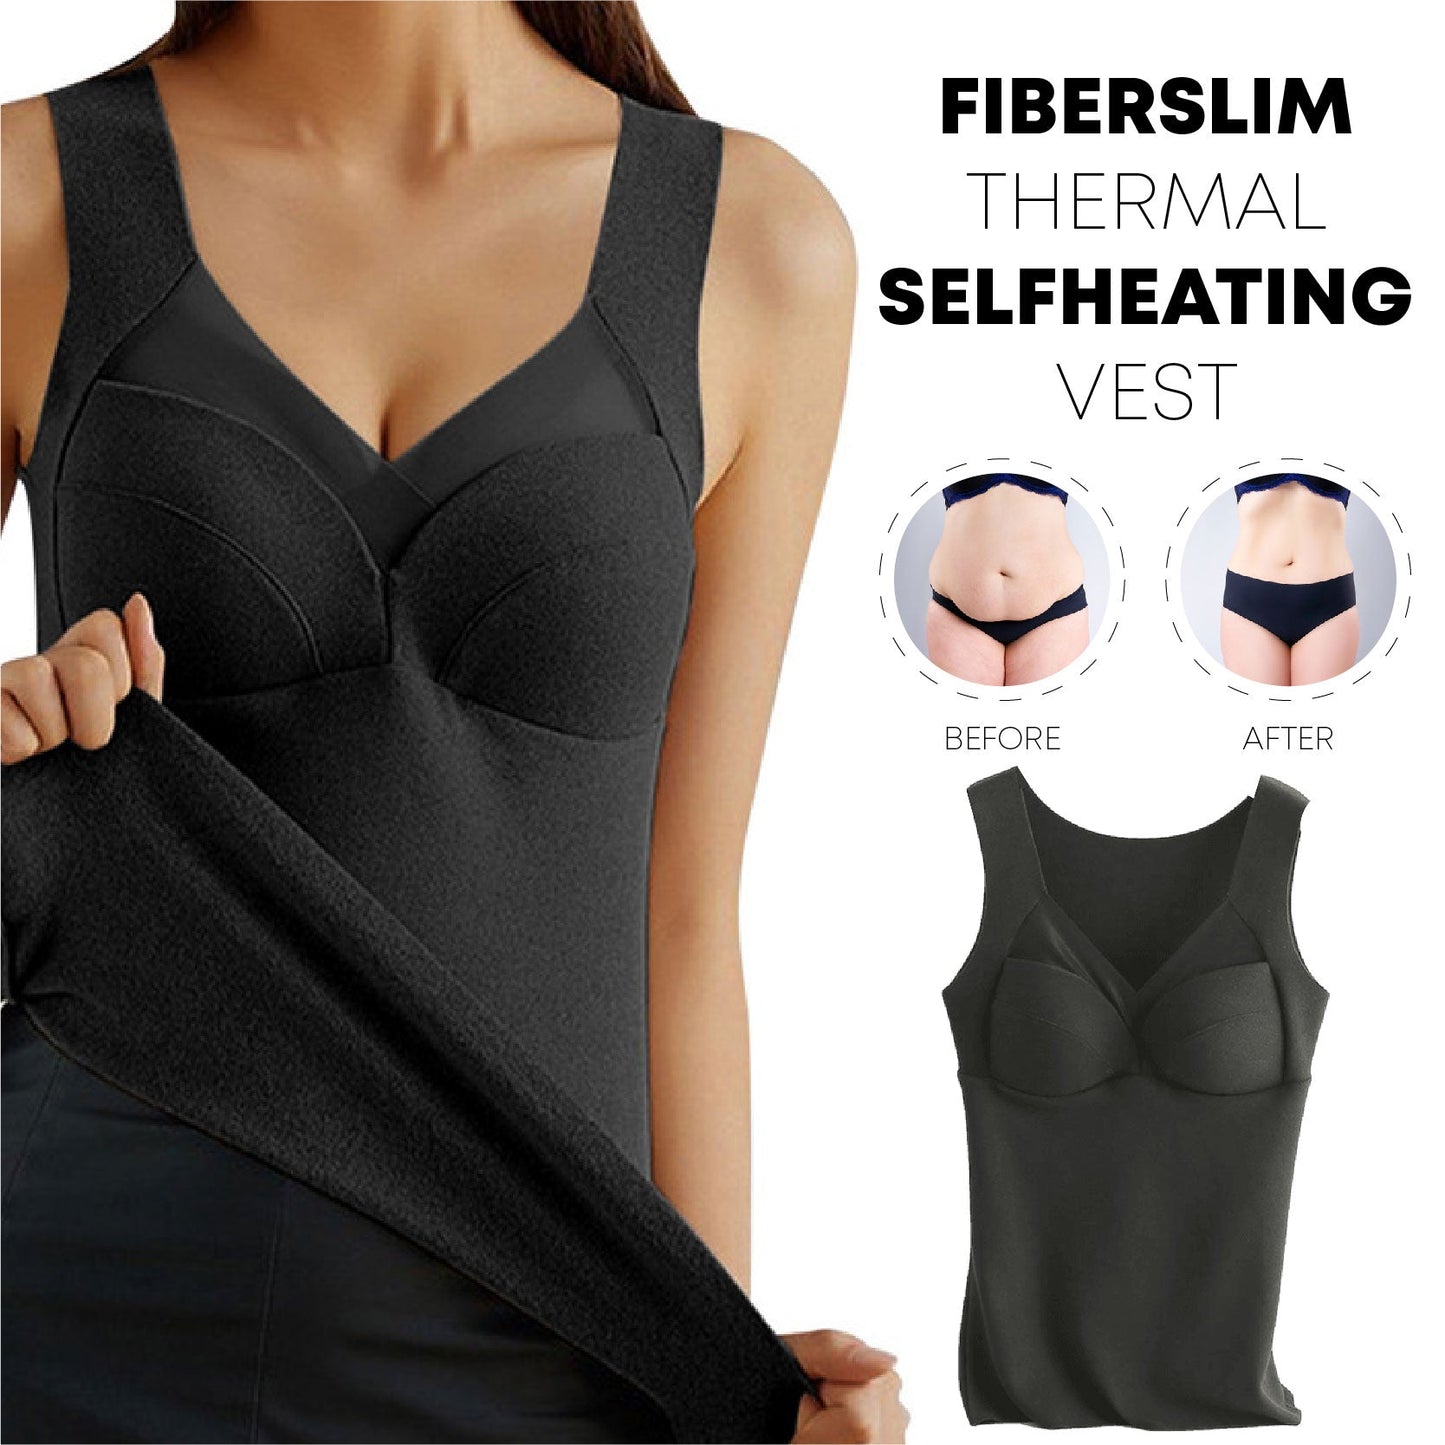 FiberSlim Thermal SelfHeating Vest